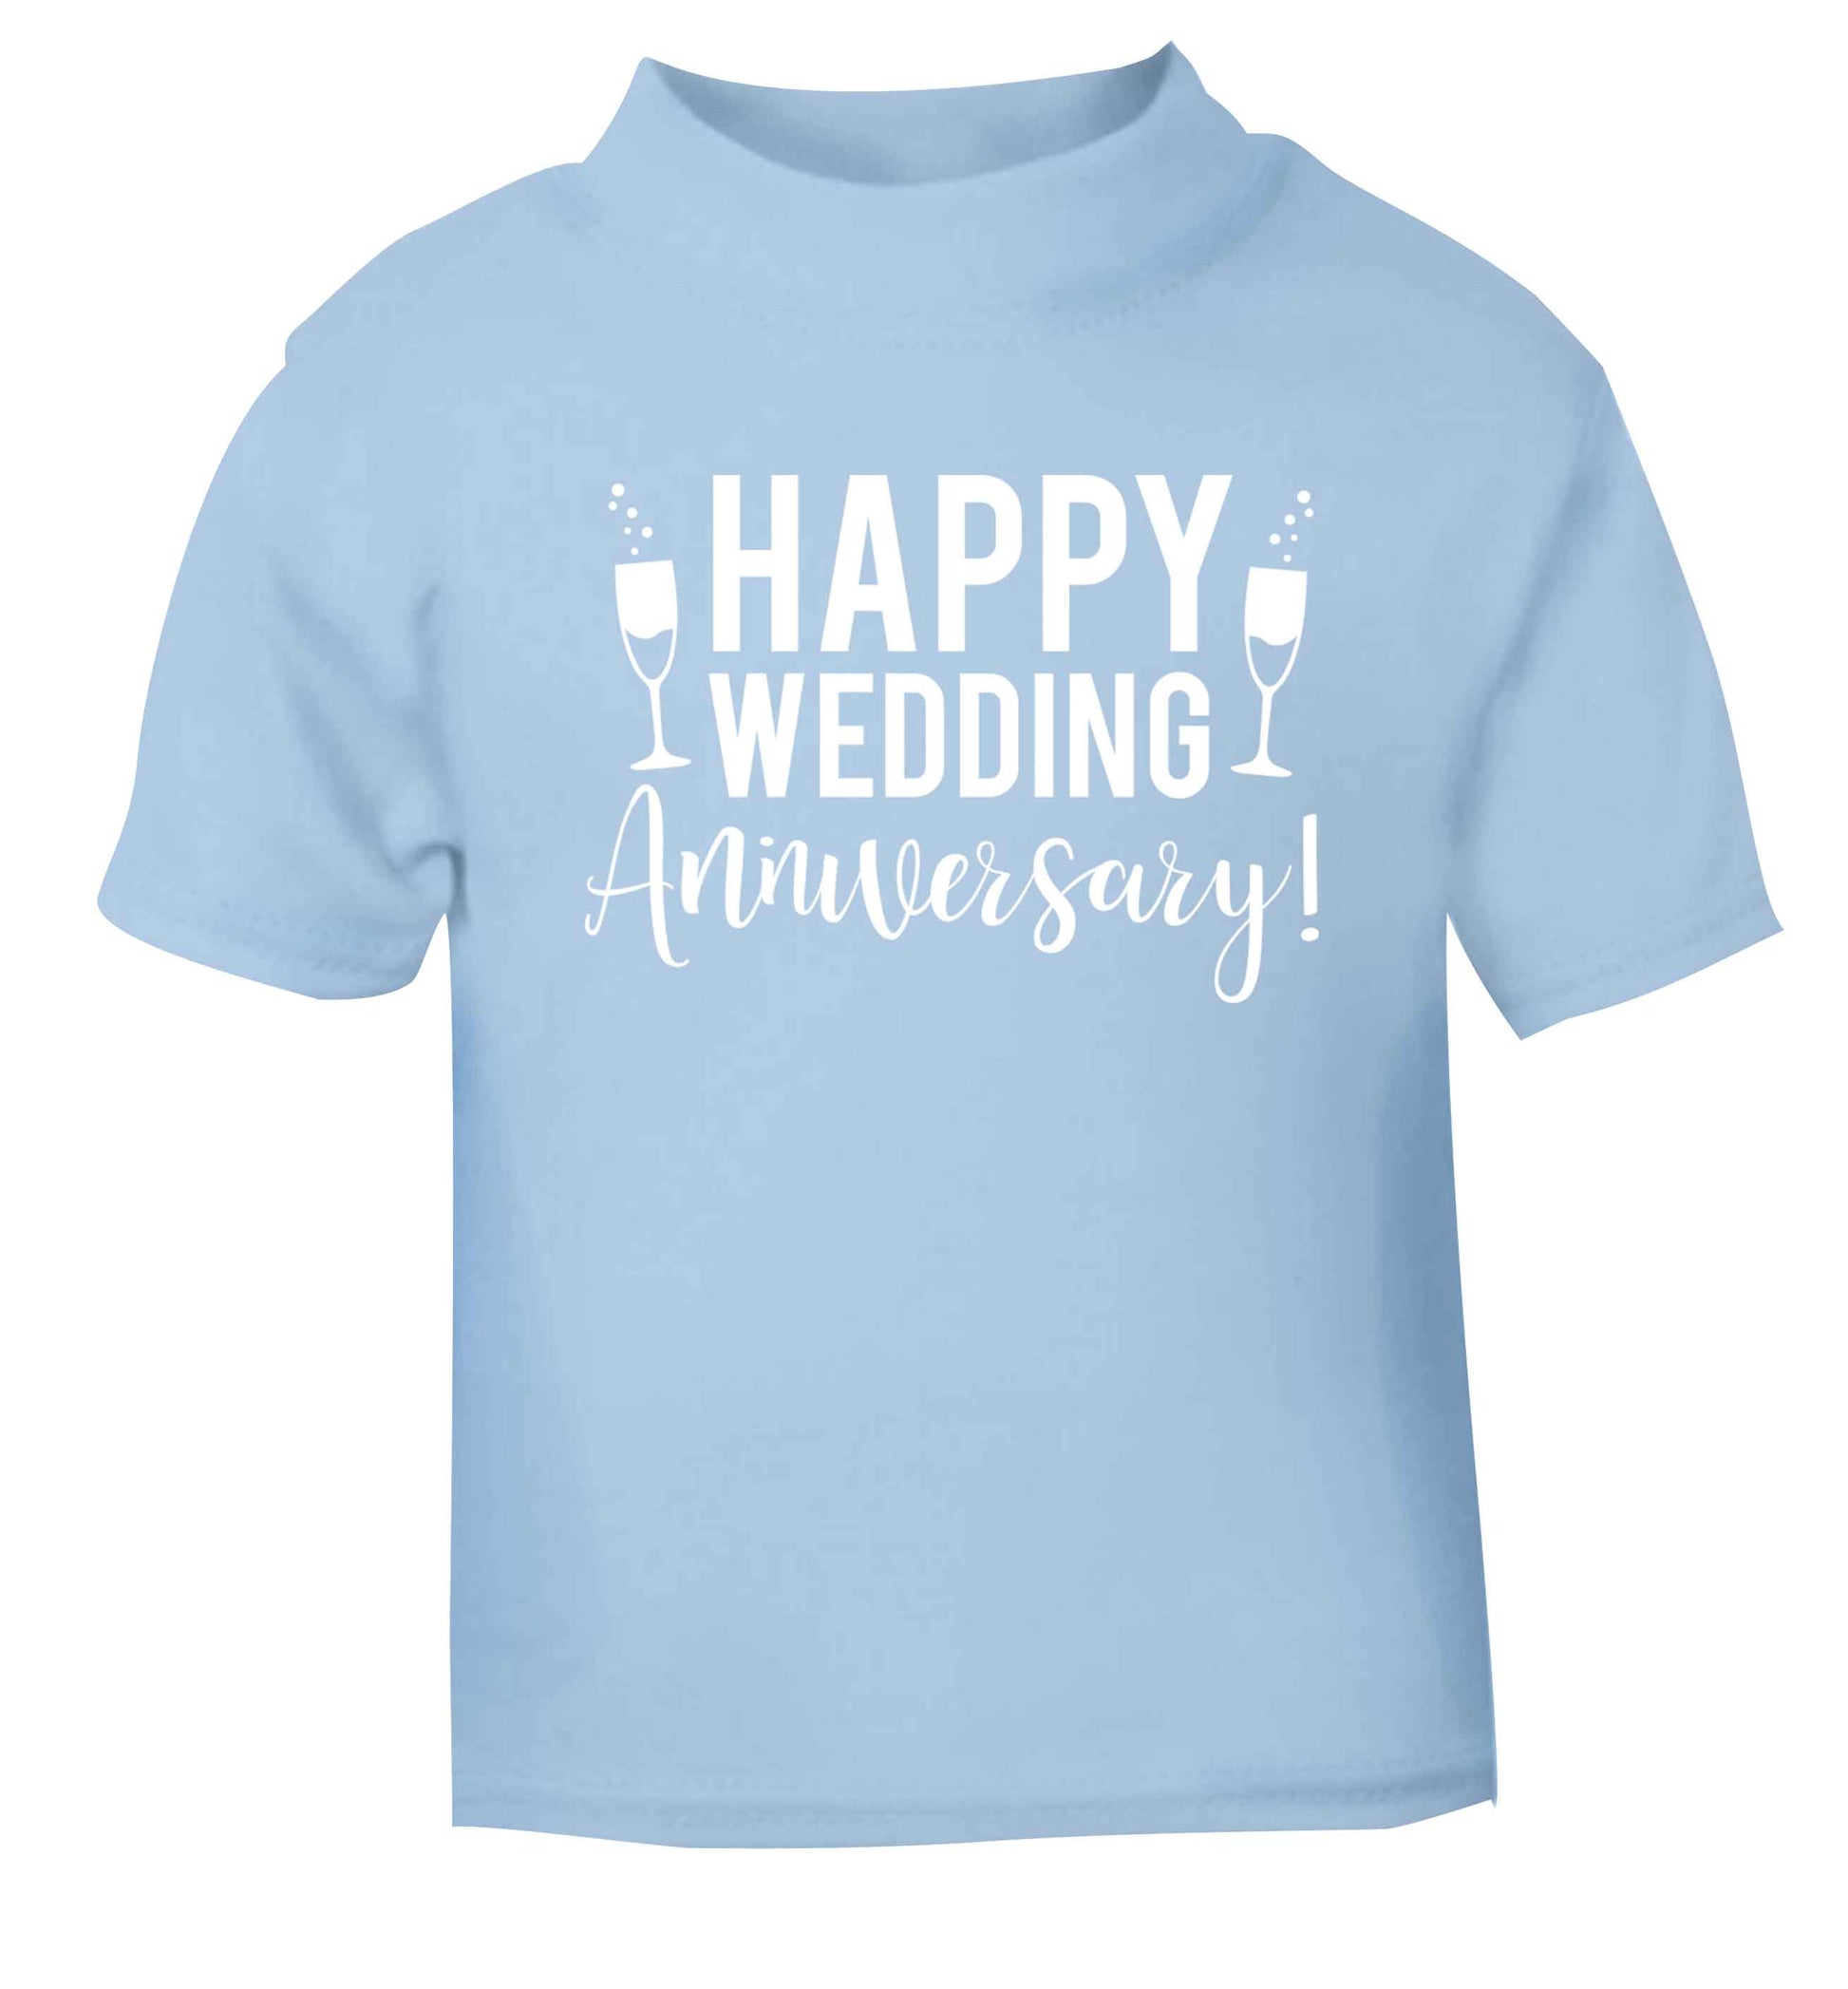 Happy wedding anniversary! light blue baby toddler Tshirt 2 Years